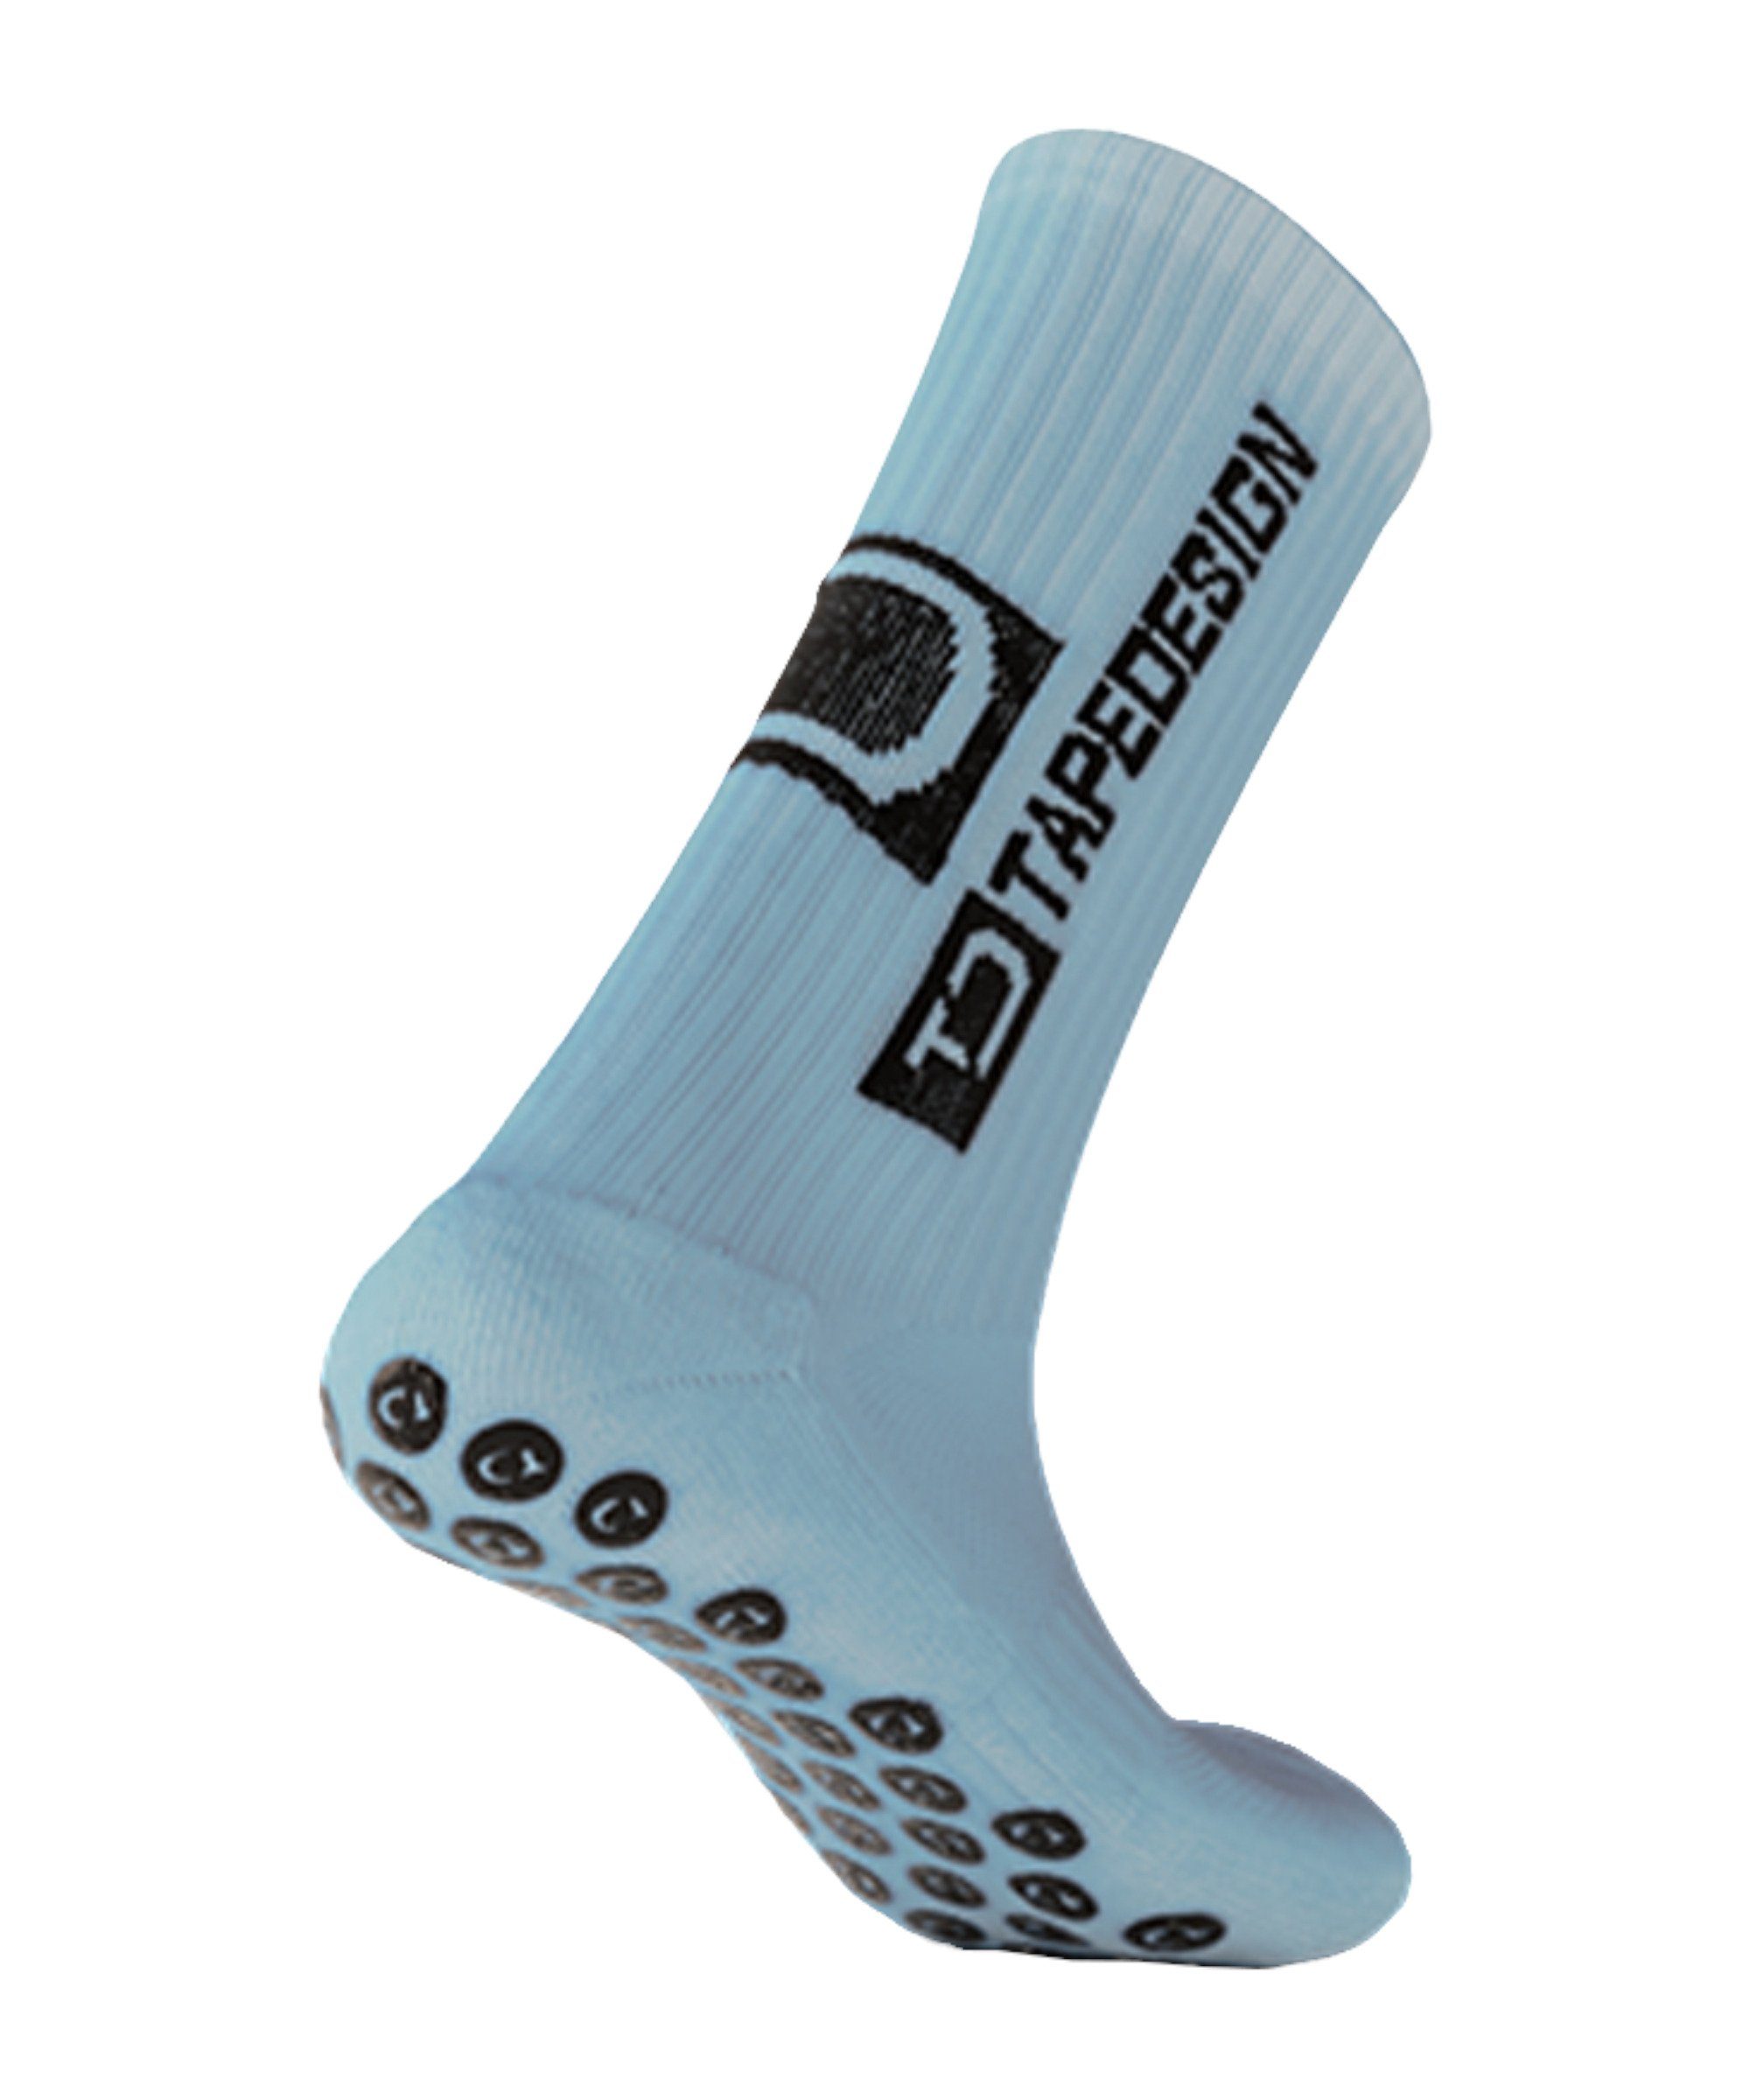 Tapedesign Sportsocken Gripsocks Socken blauschwarz default